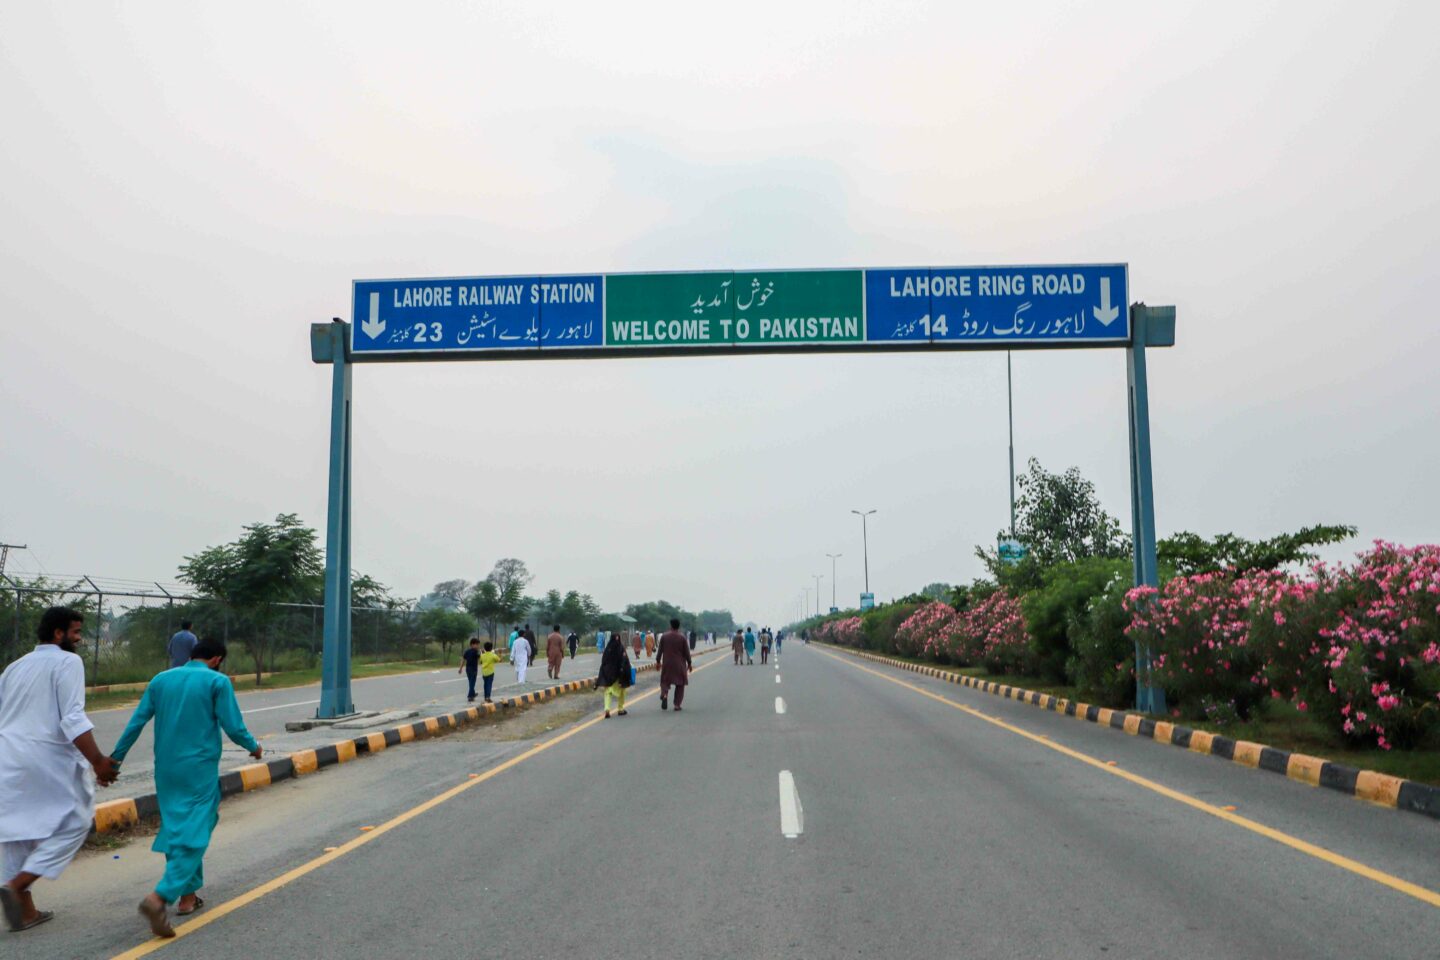 Wagah Border Crossing, border sign Crossing Wagah Border India Pakistan on foot